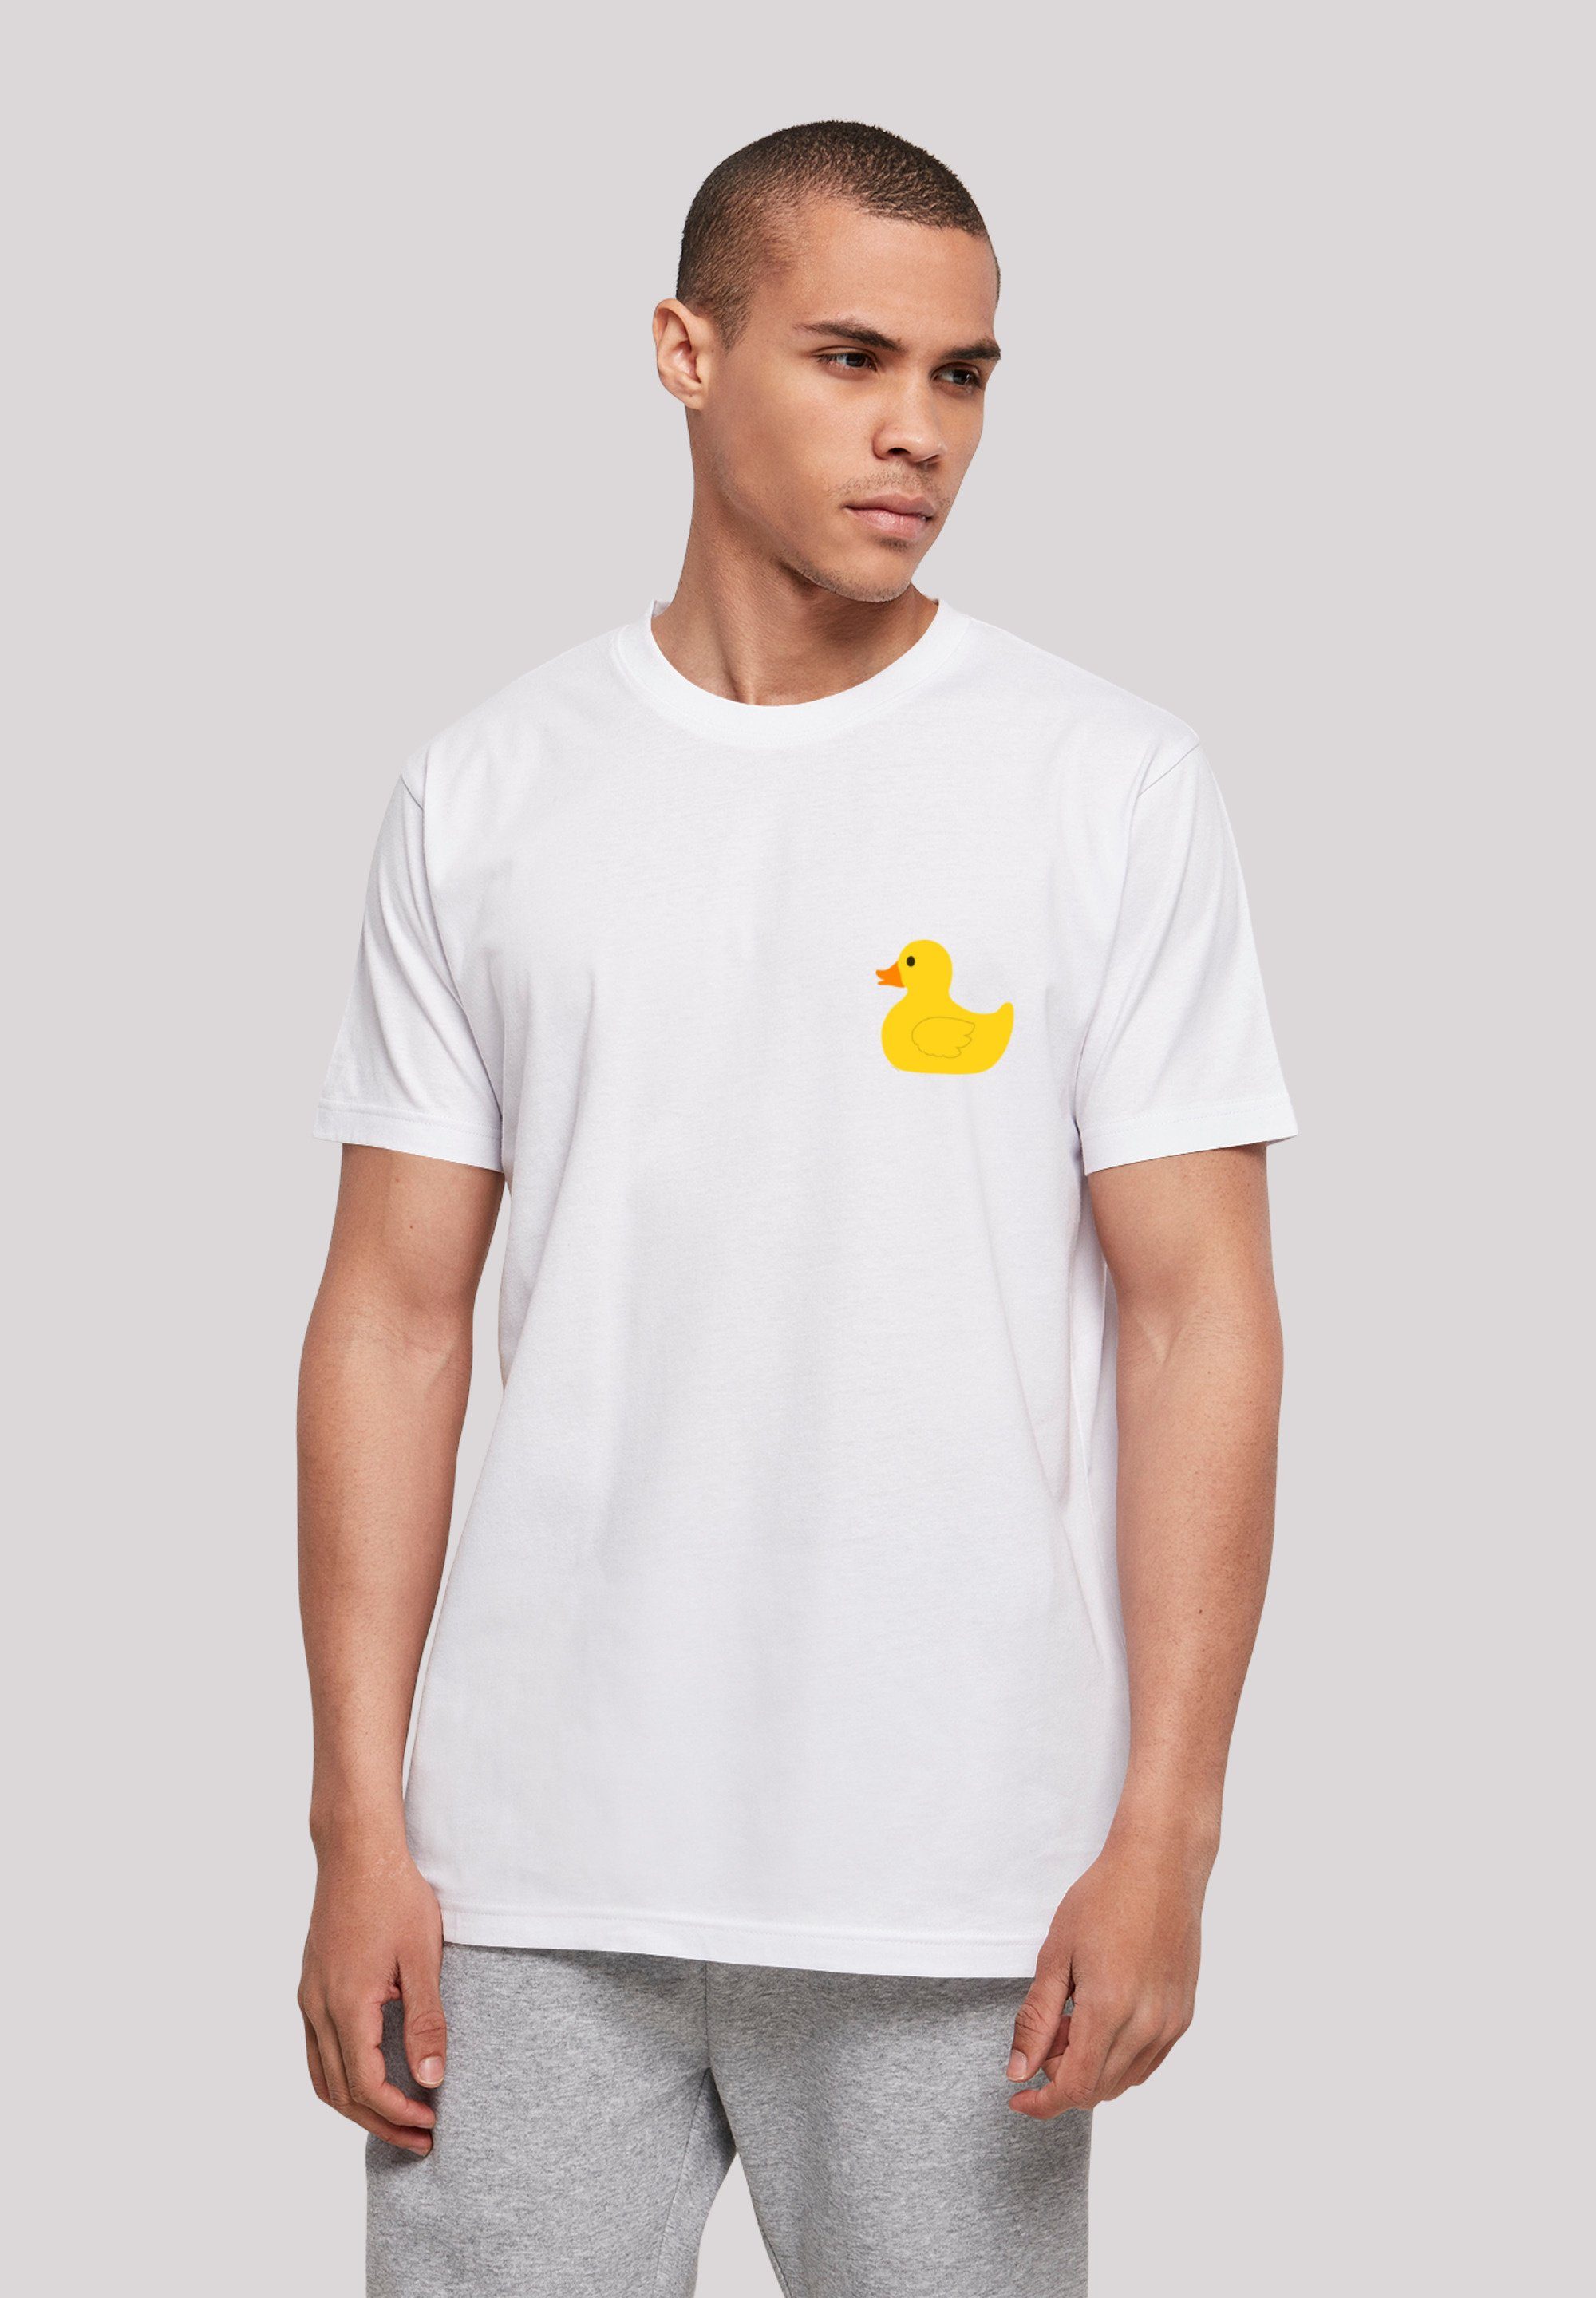 F4NT4STIC Print, und T-Shirt Yellow Hals Doppelnähte TEE Saum am Rippbündchen am UNISEX Rubber Duck